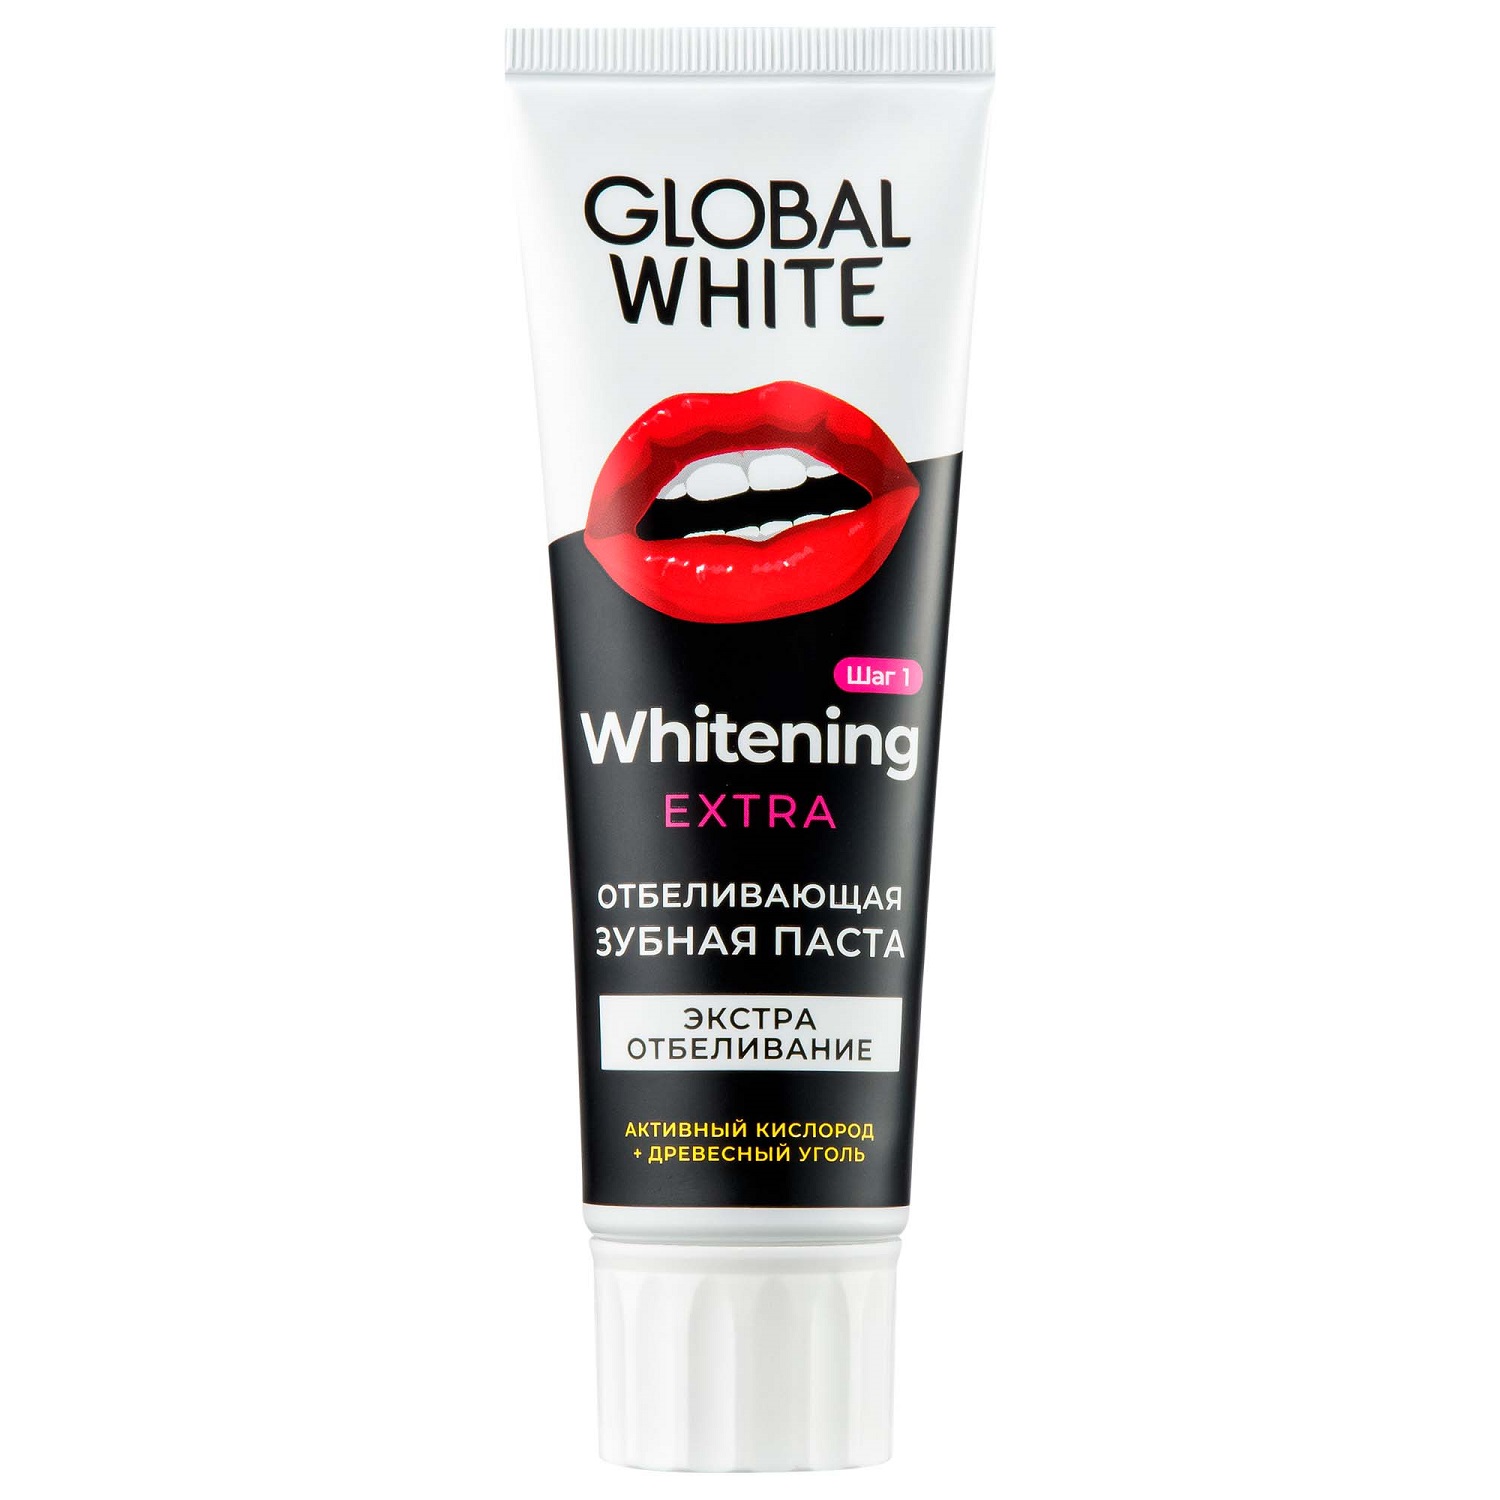 Global White Отбеливающая зубная паста Extra Whitening, 100 г (Global White, Подготовка к отбеливанию)